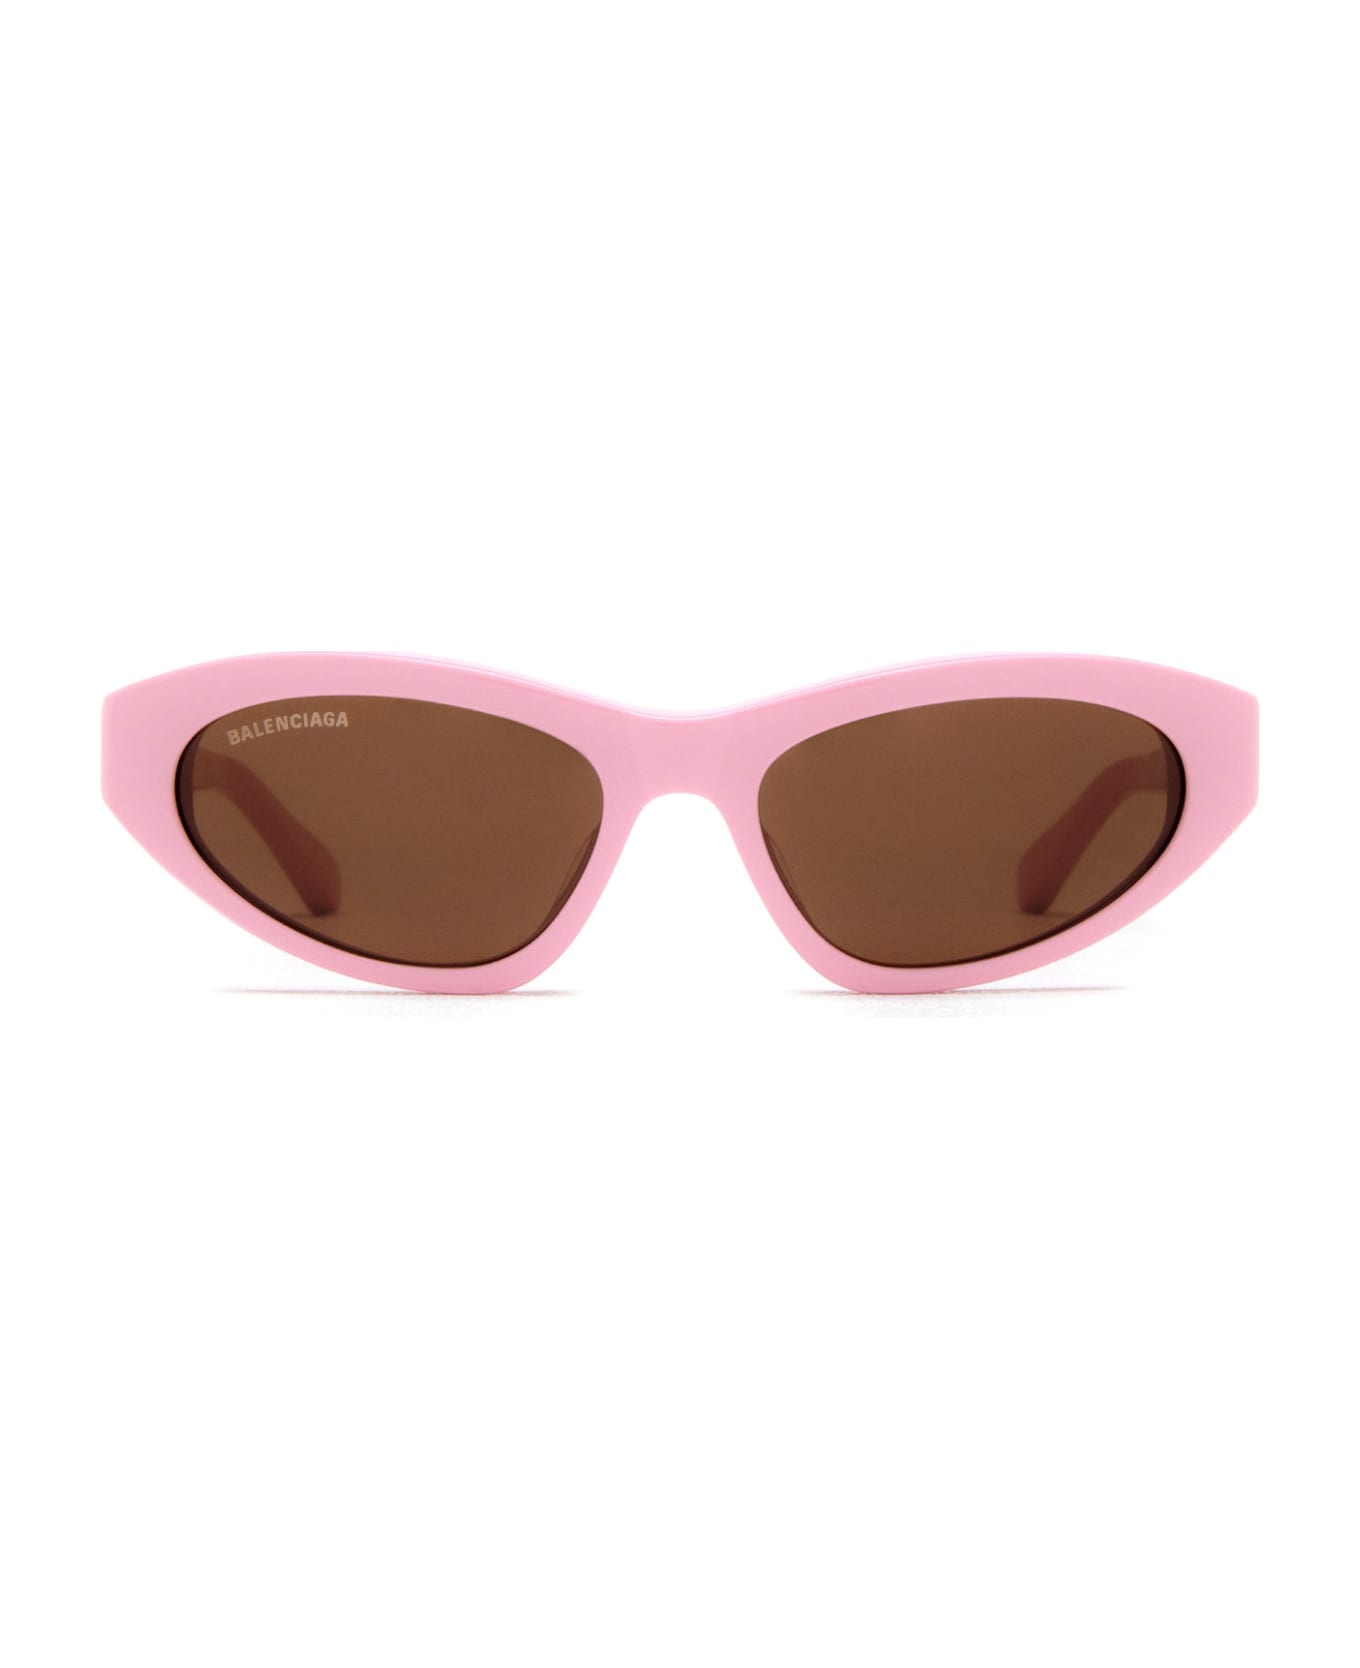 Balenciaga Eyewear Bb0207s Sunglasses - Pink サングラス